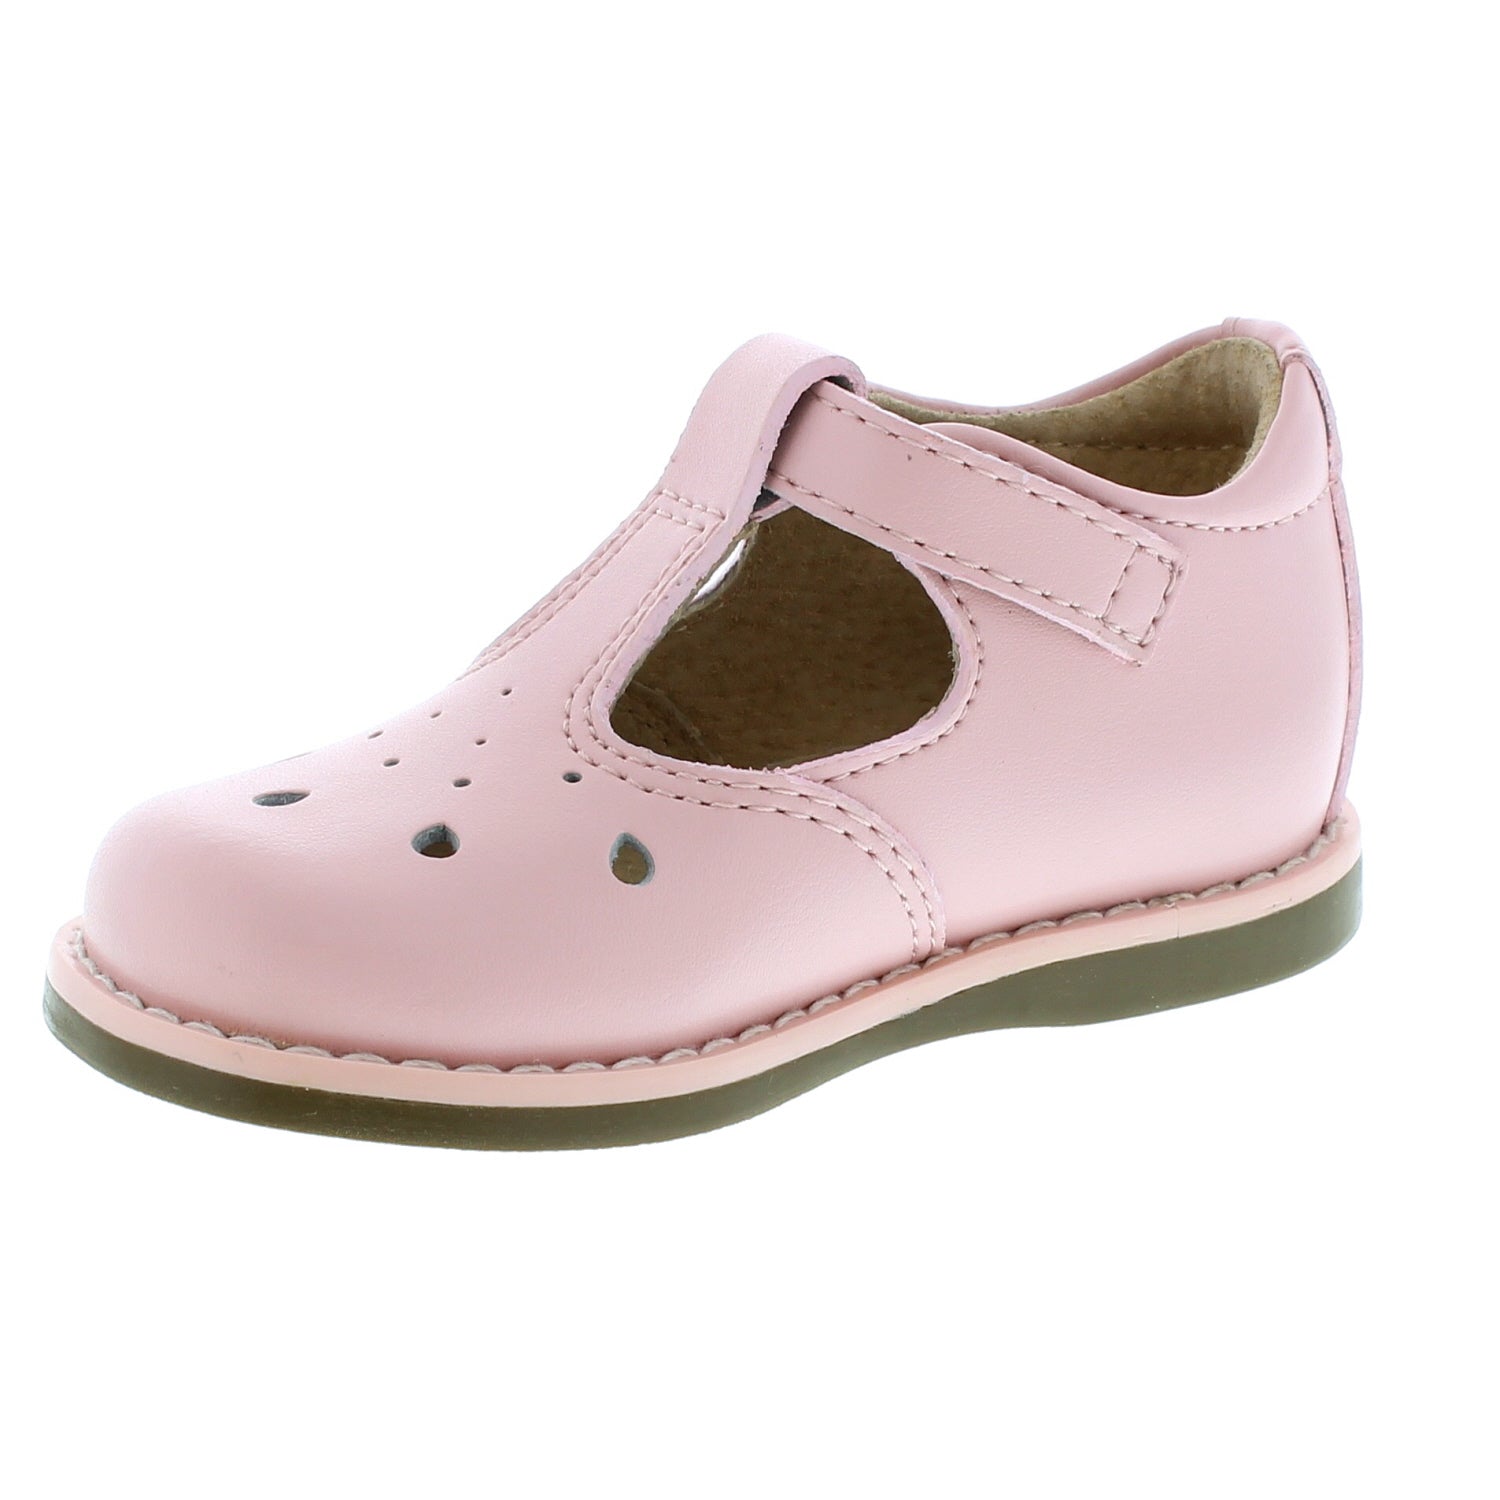 Harper Baby T-strap Dress Shoe - Pink Leather